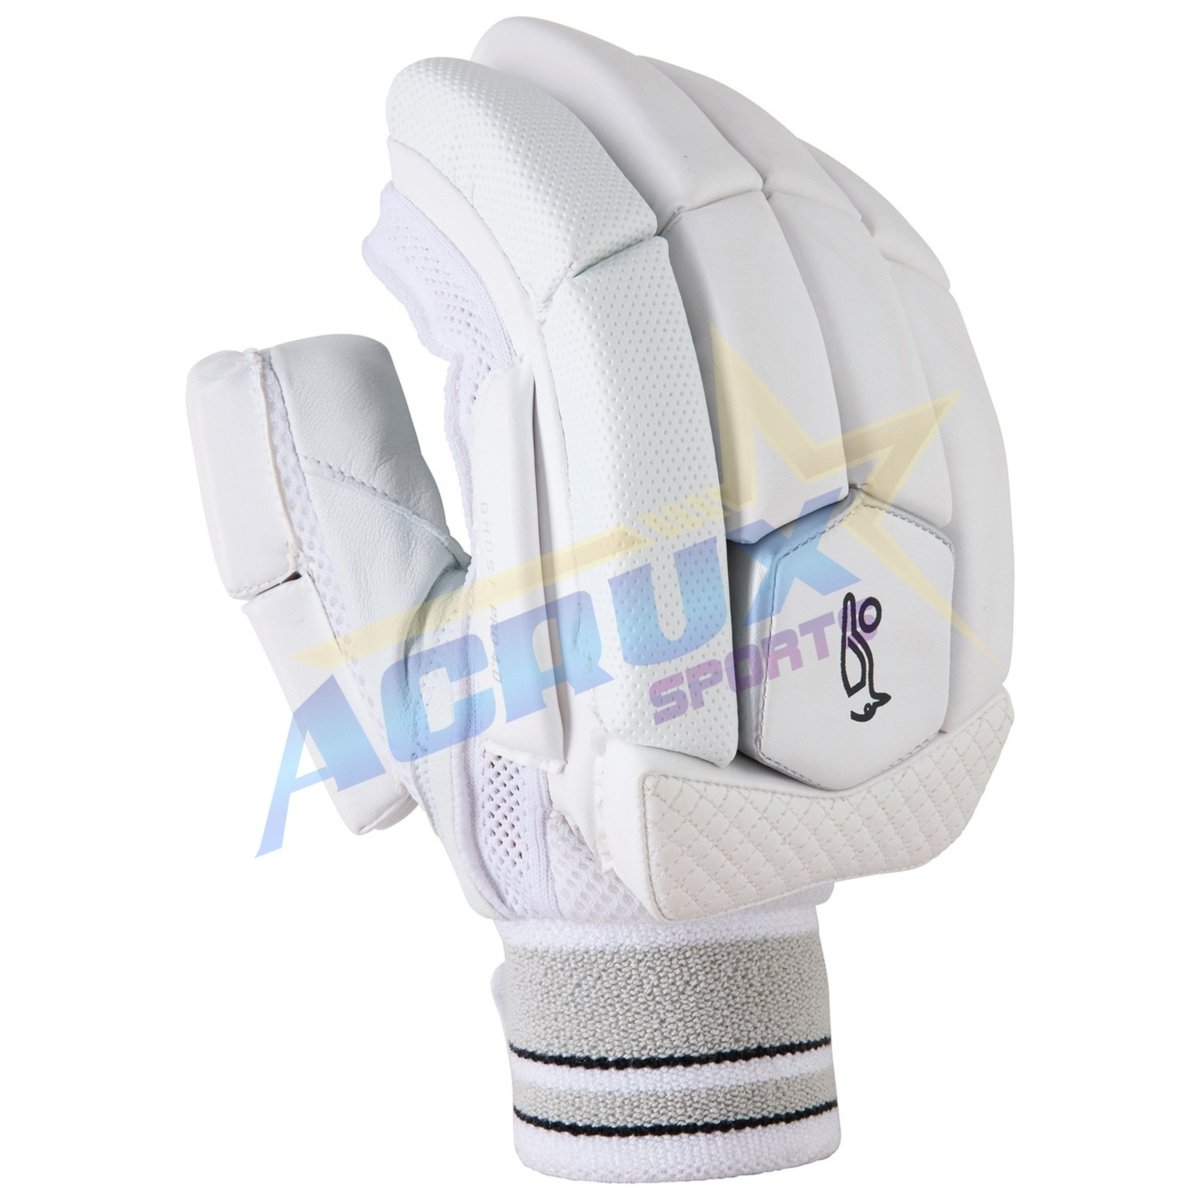 Kookaburra Ghost Pro 4.0 Junior Cricket Batting Gloves.